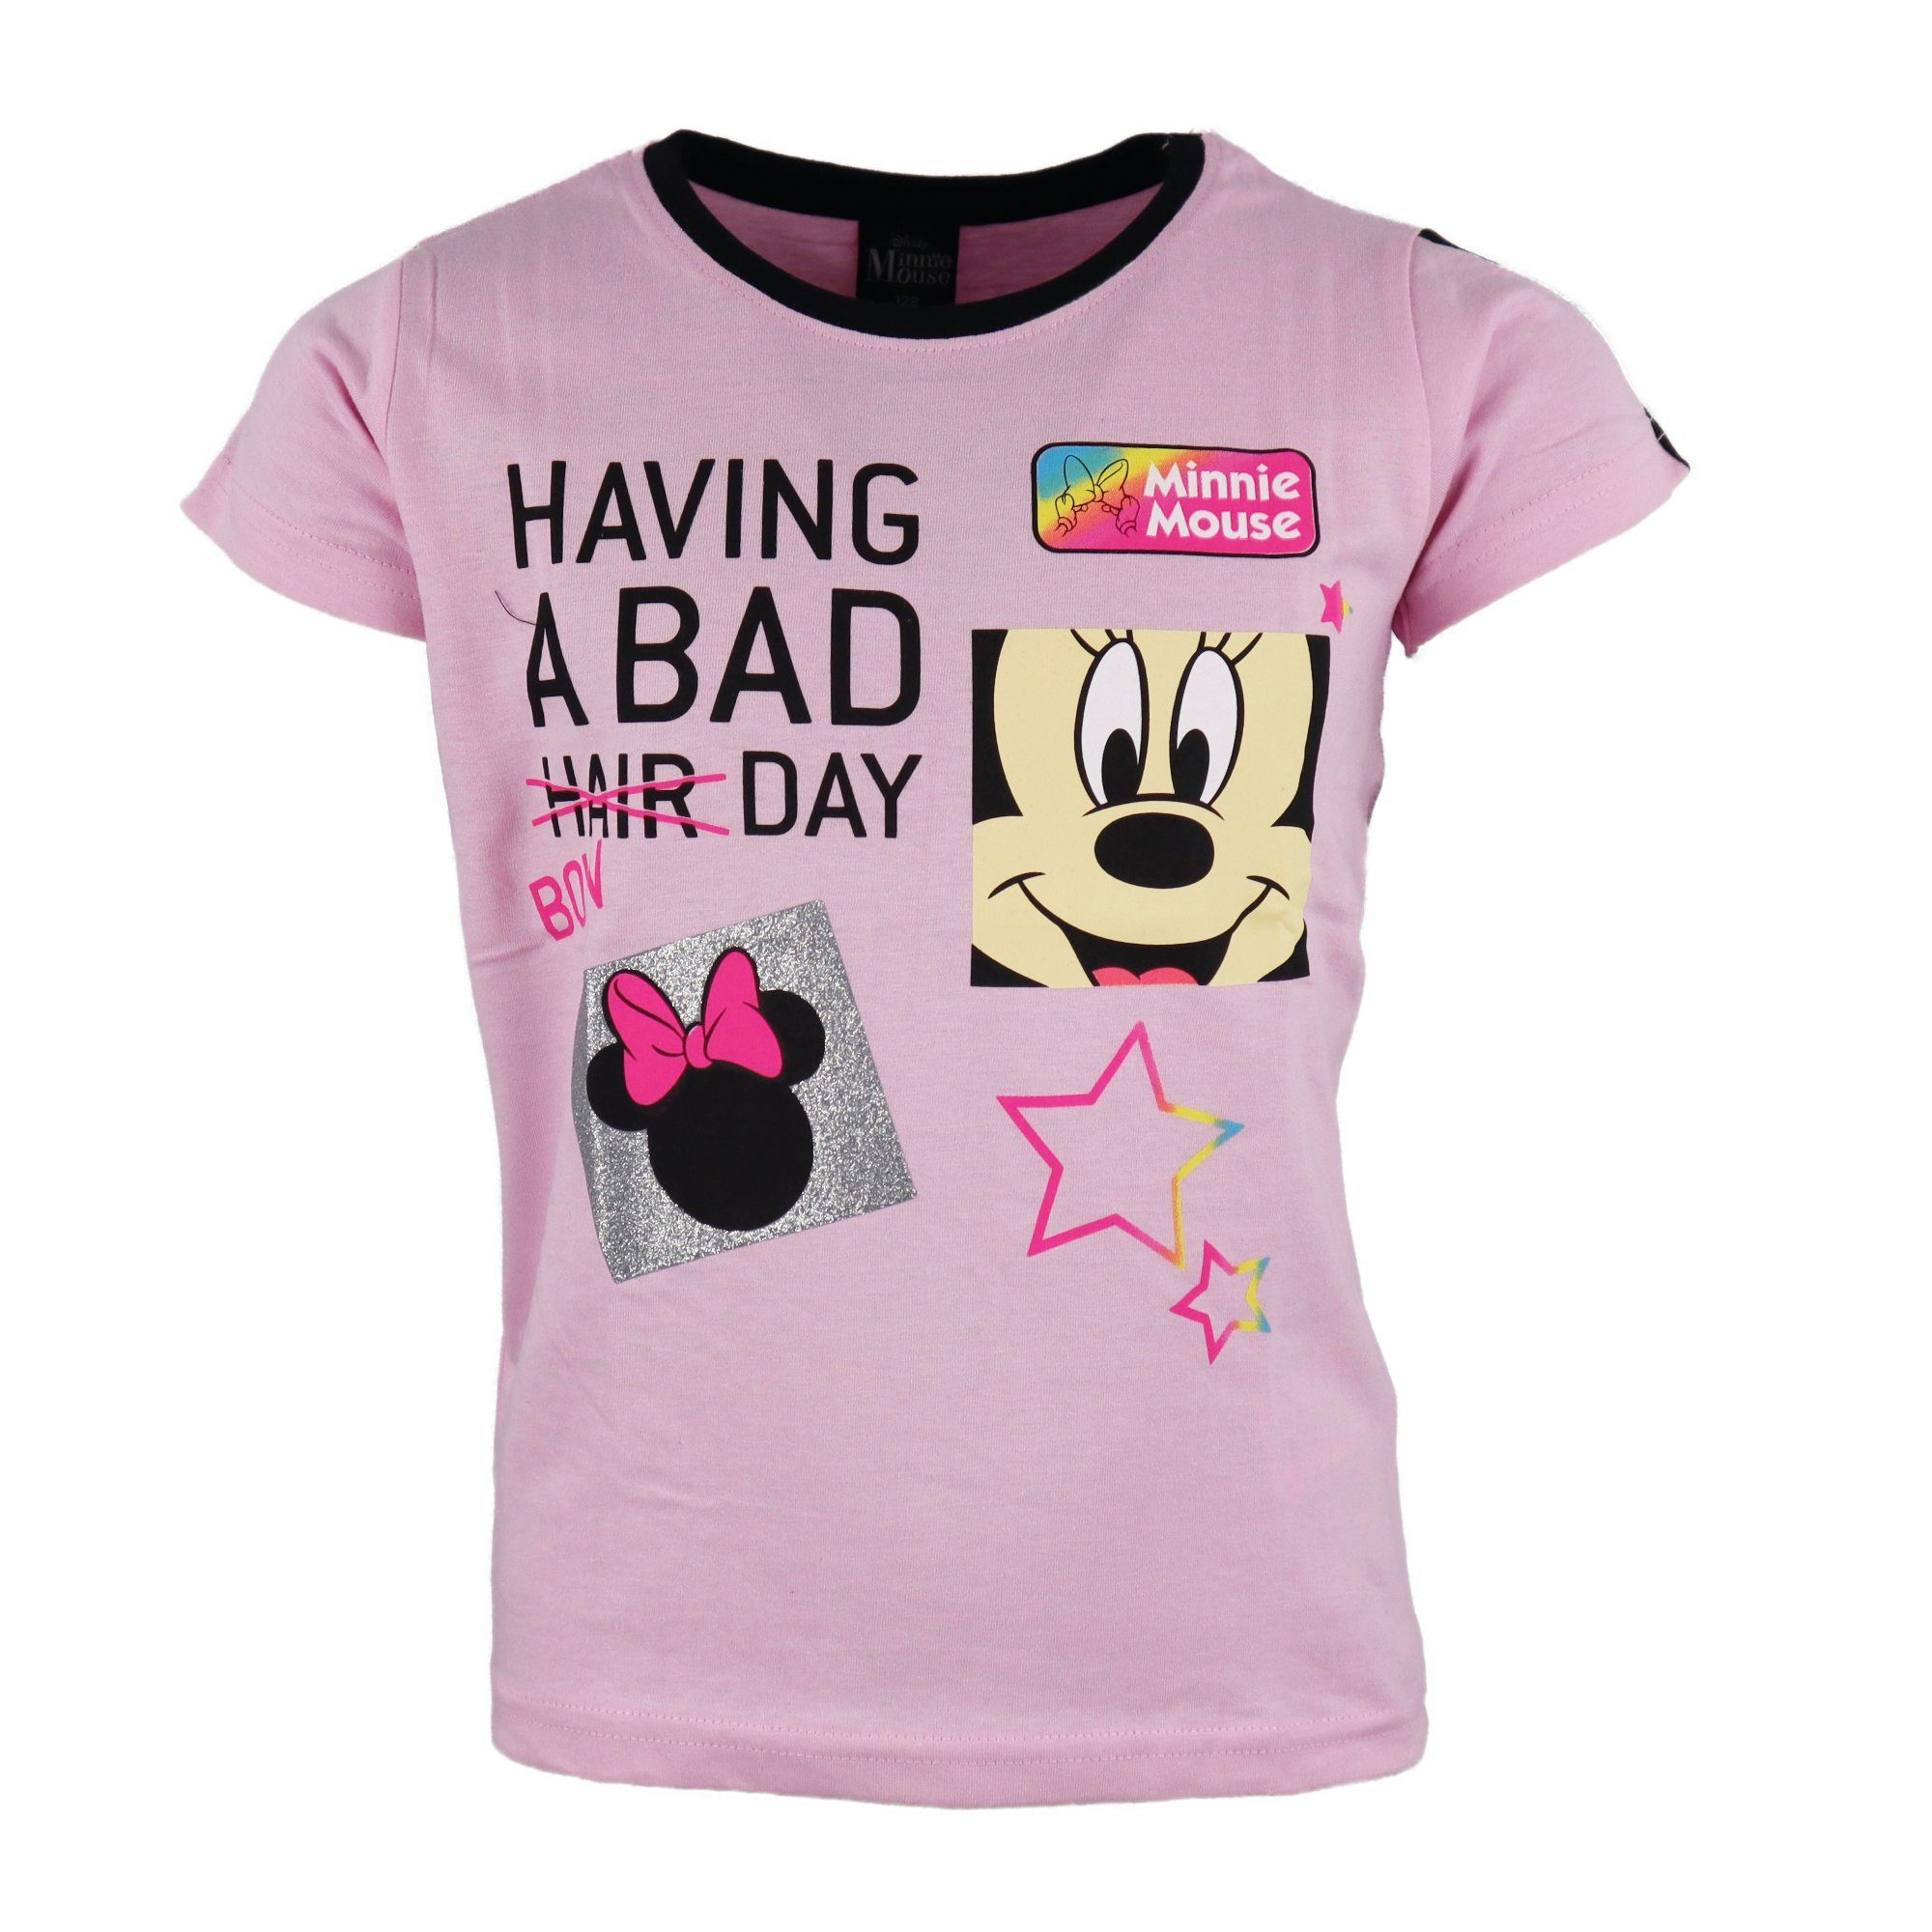 Disney Minnie Mouse Print-Shirt Minnie Maus Mädchen Kinder T-Shirt Gr. 104 bis 134, 100% Baumwolle, Rosa, Grün